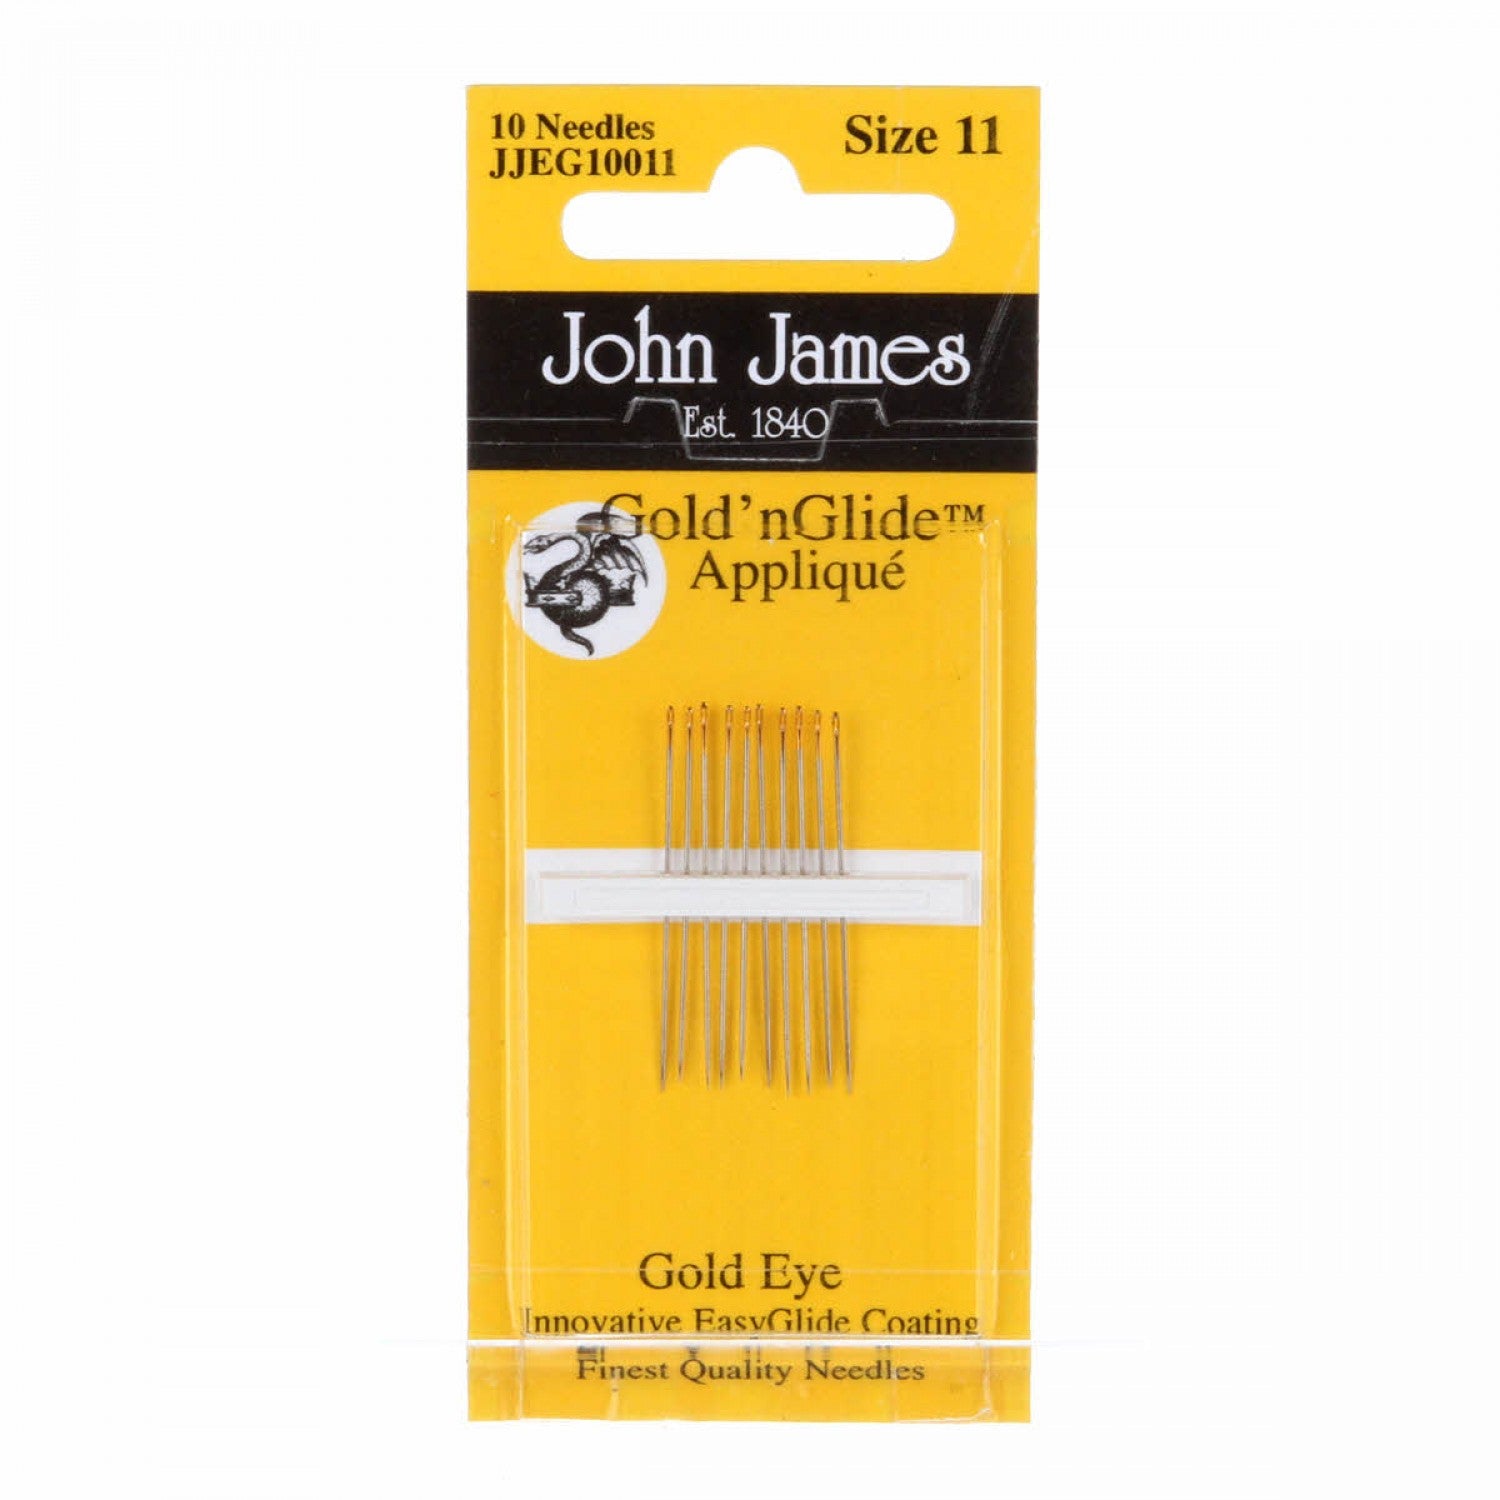 John James Gold 'n Glide Applique Needles